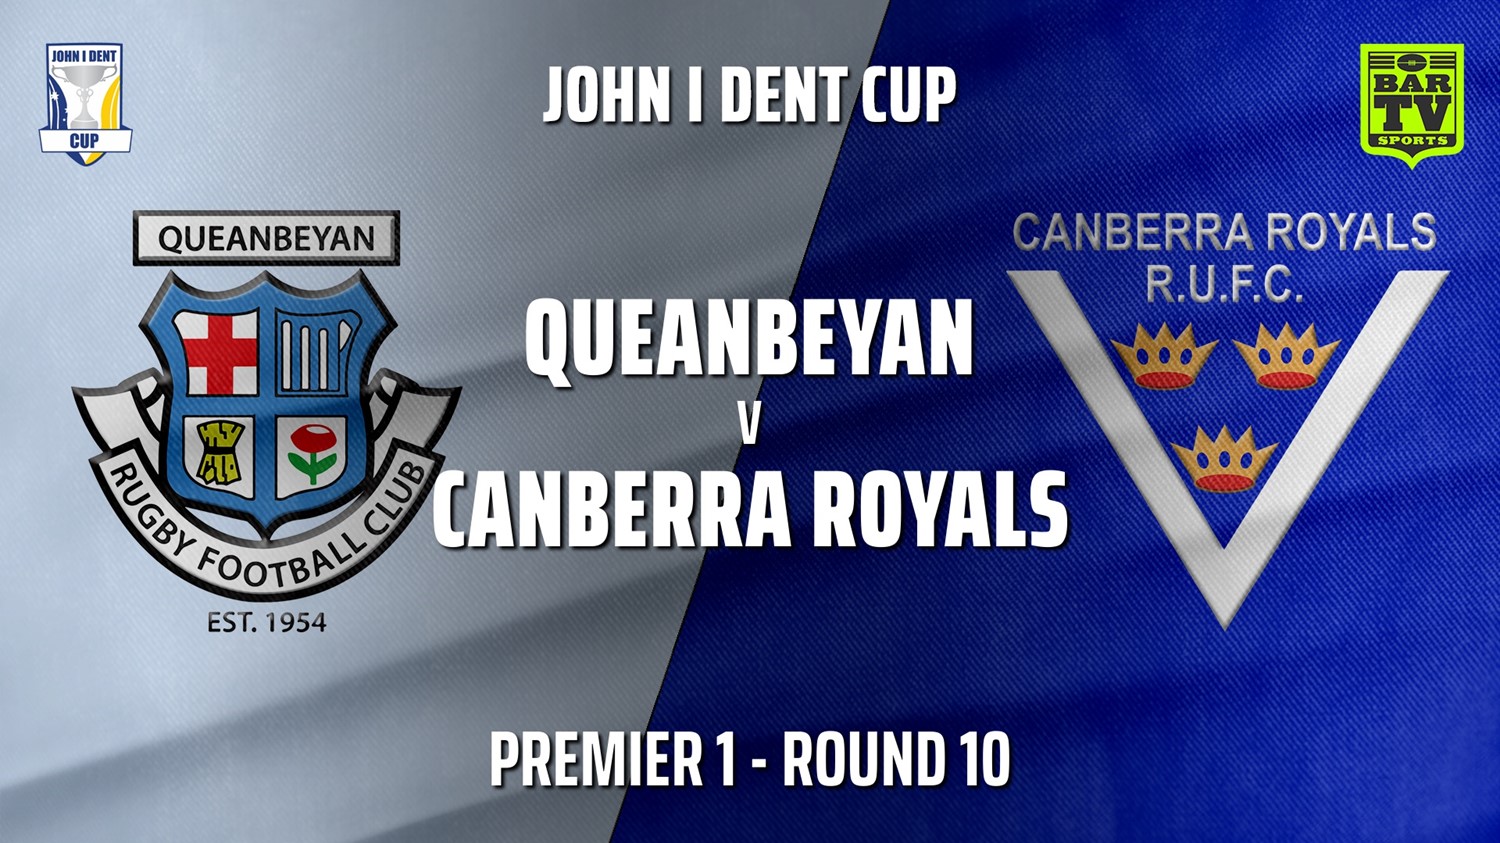 210703-John I Dent (ACT) Round 10 - Premier 1 - Queanbeyan Whites v Canberra Royals Minigame Slate Image